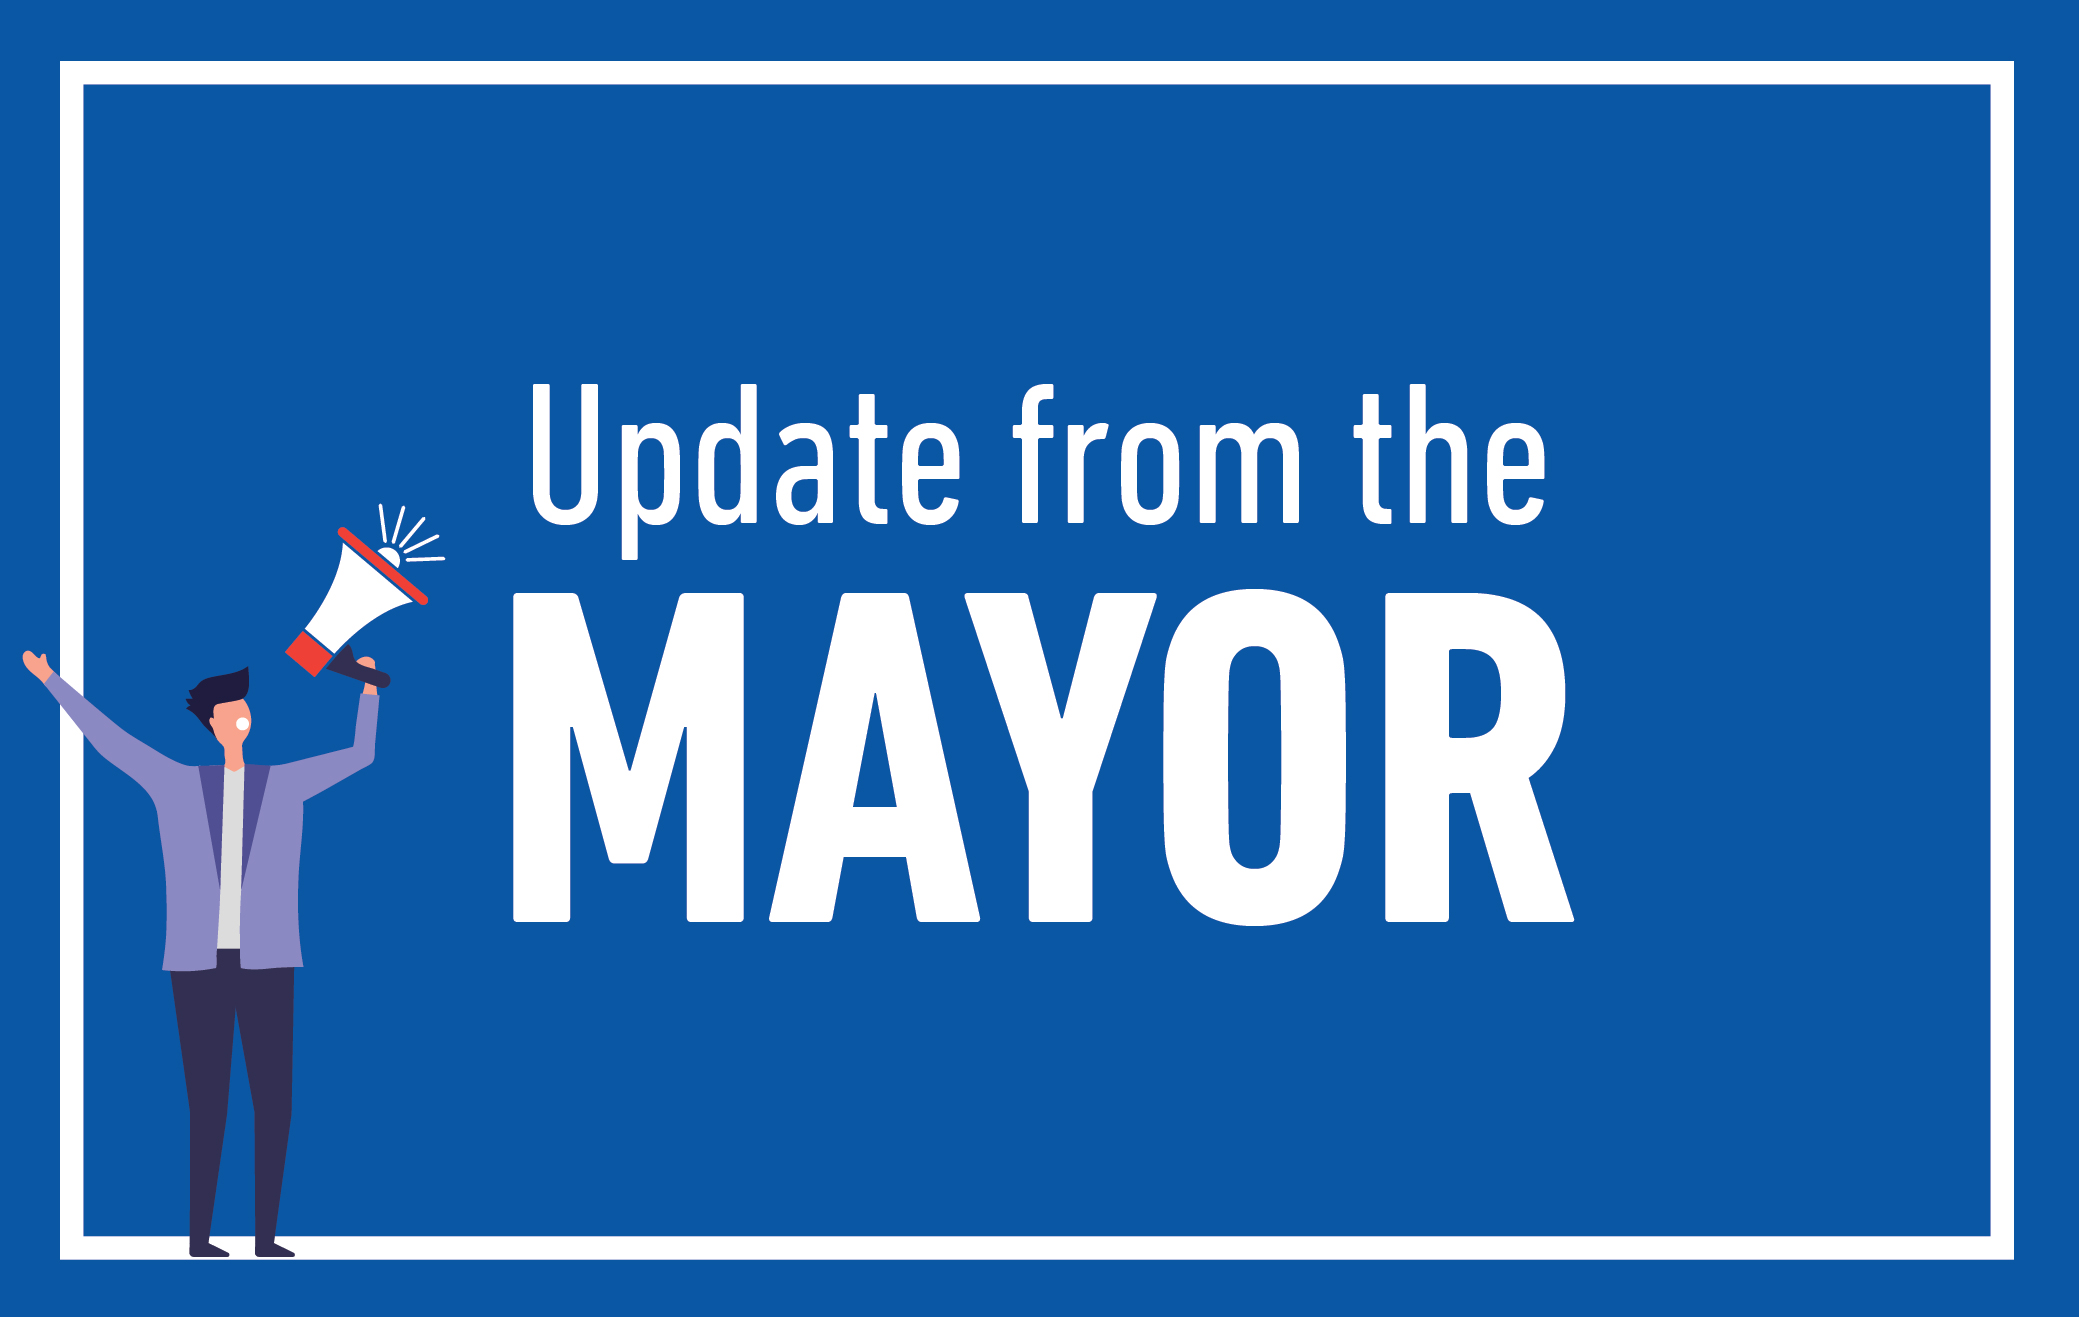 Mayor's message graphic